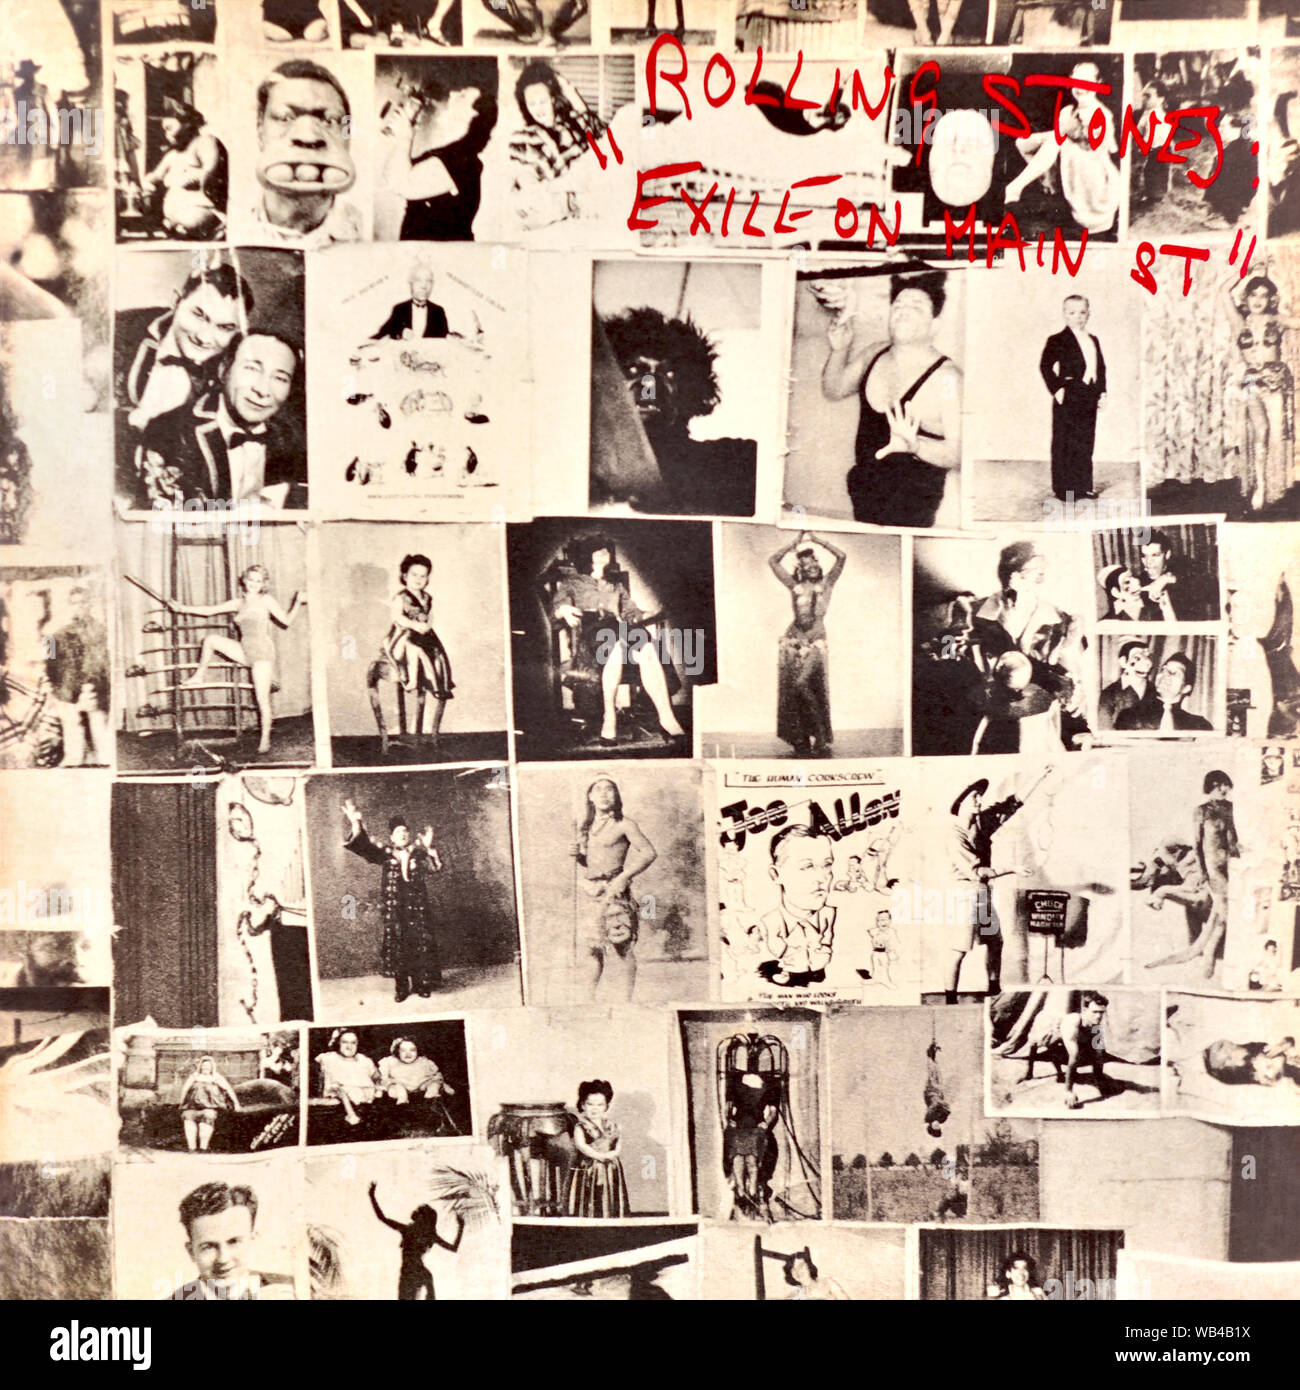 The Rolling Stones - original vinyl album cover - Exile On Main St. - 1972  Stock Photo - Alamy